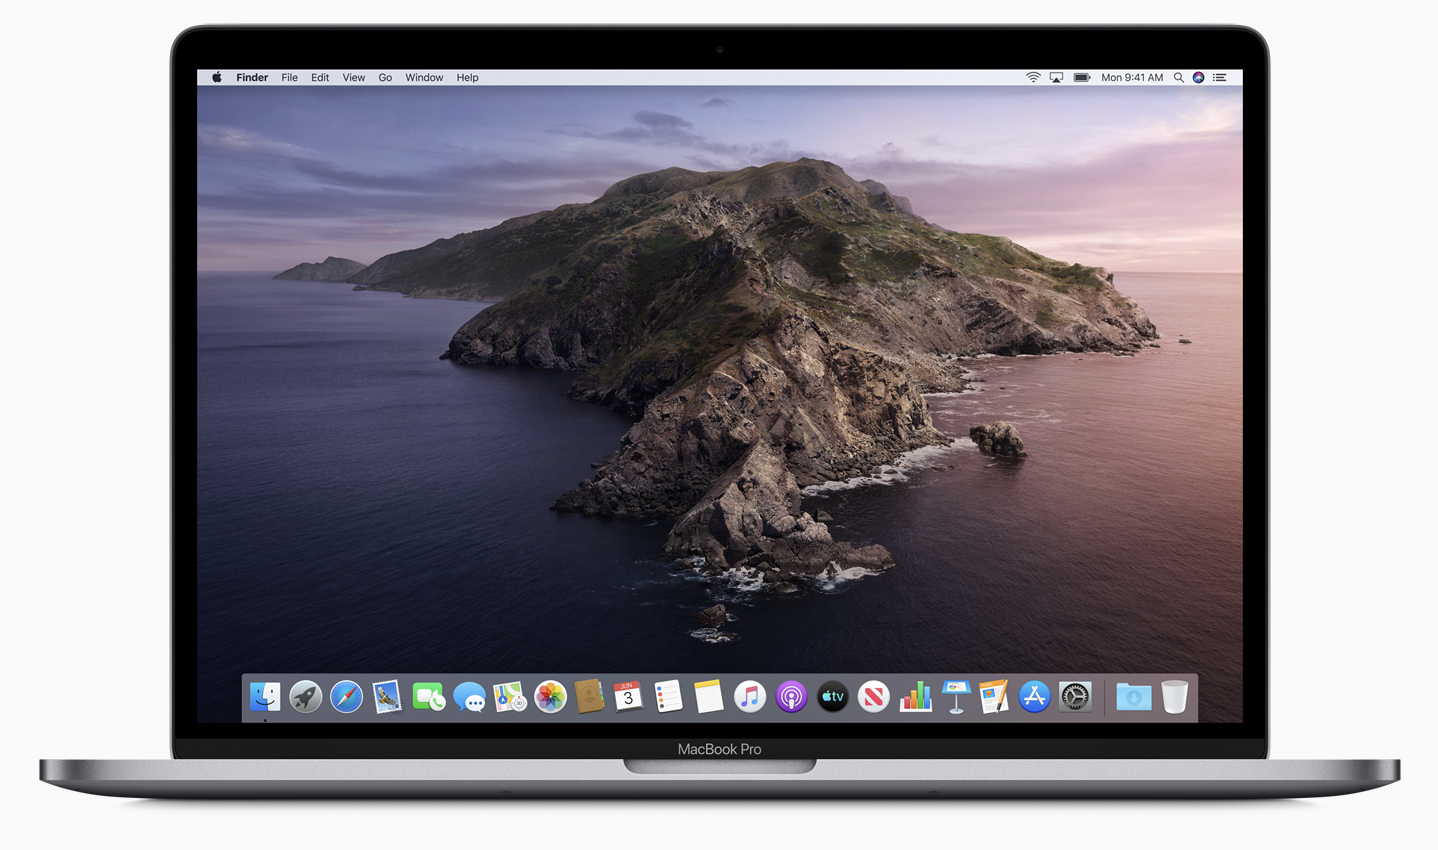 Apple posts first developer beta of macOS Catalina 10.15.1